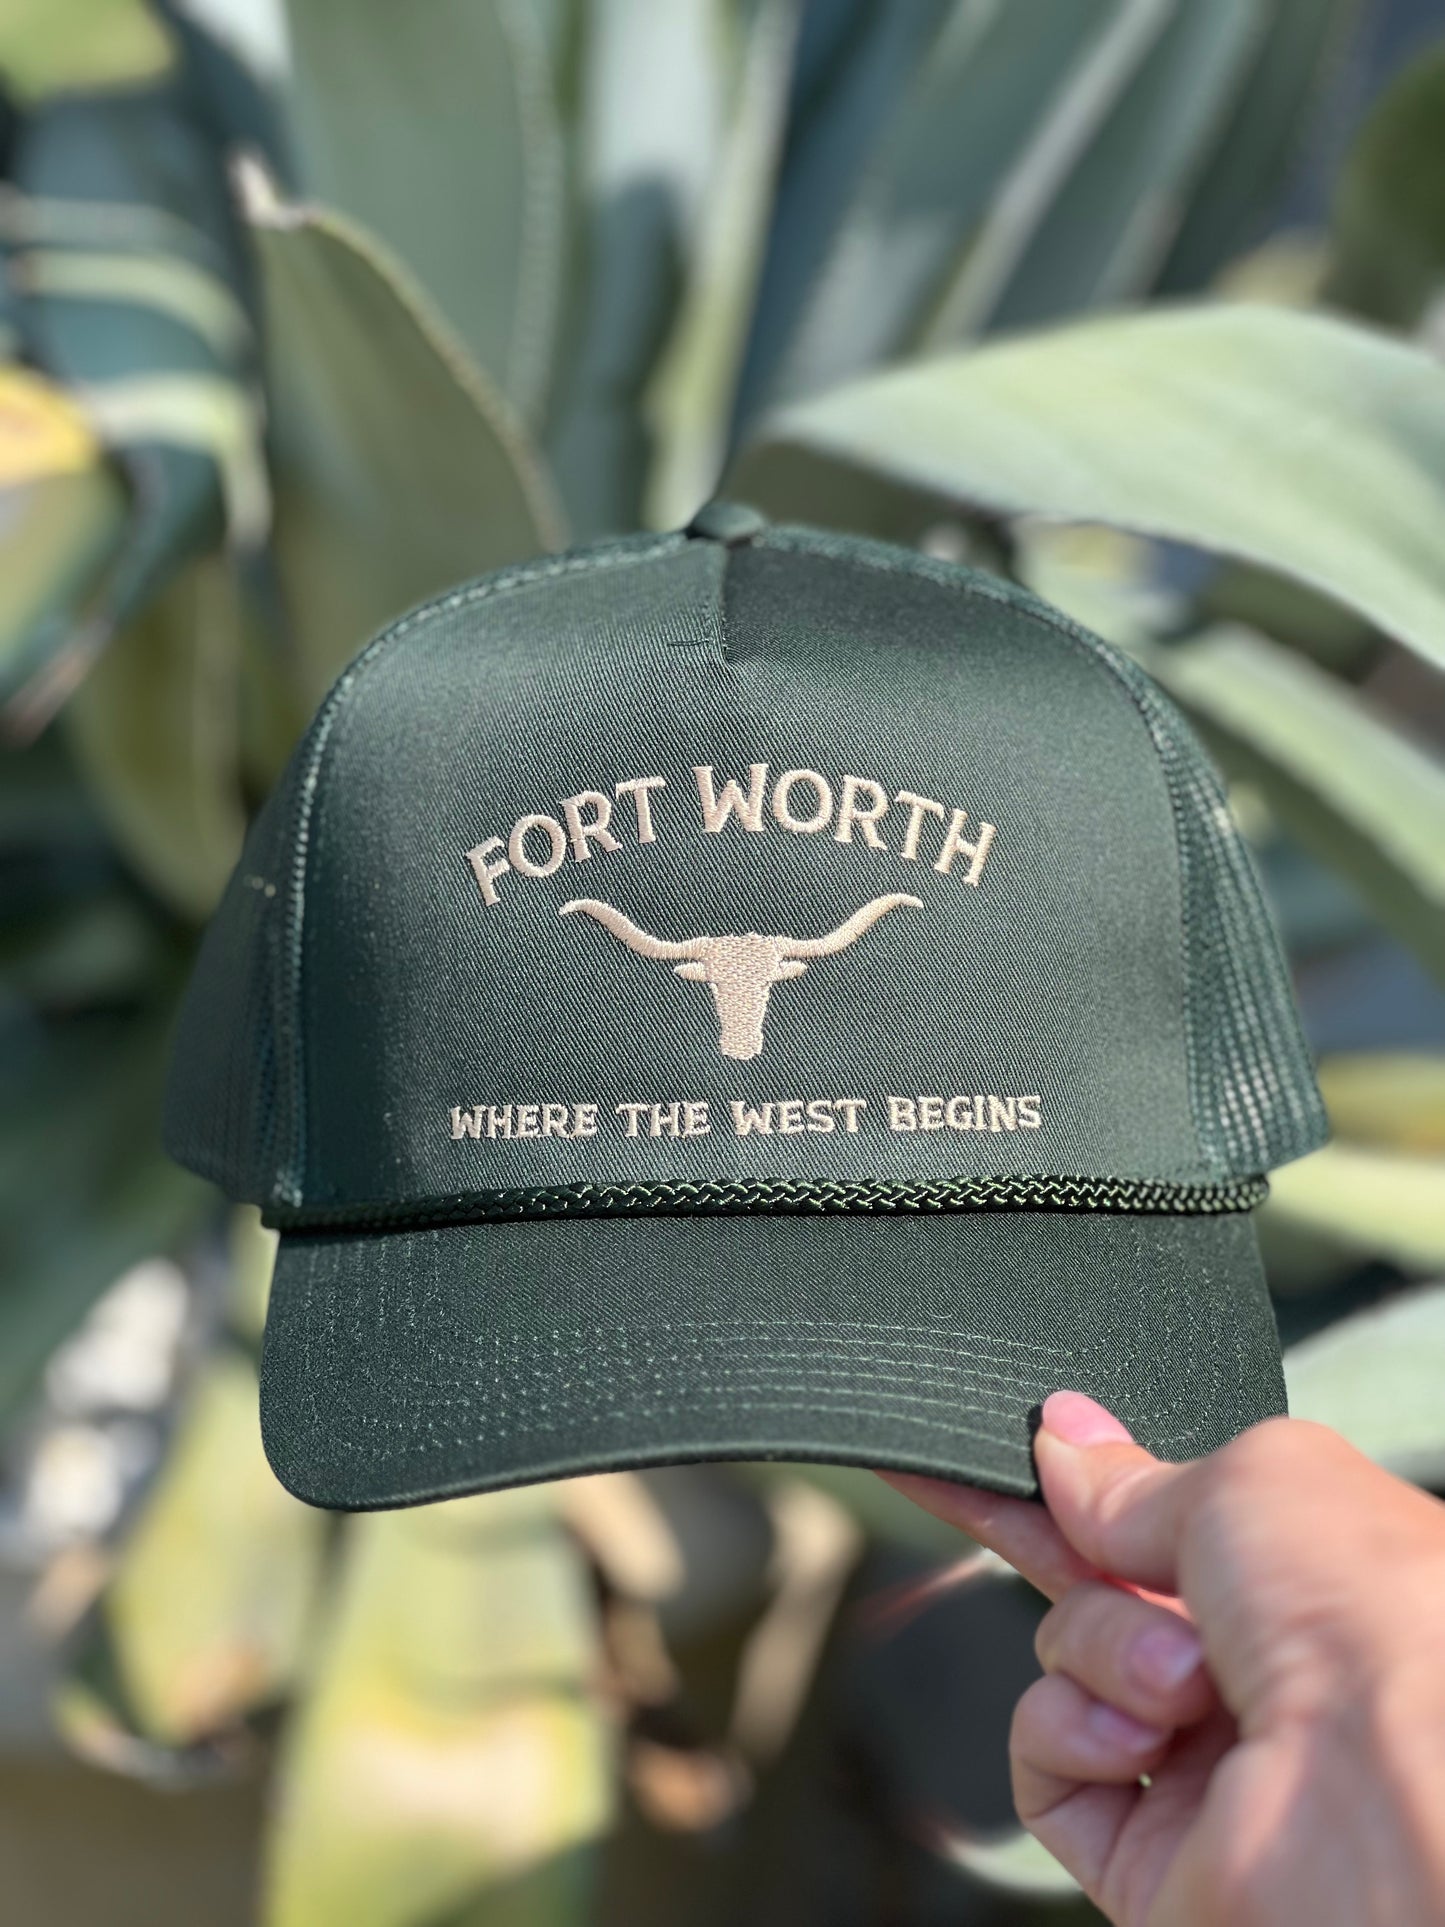 Fort Worth, Where The West Begins - Dark Green